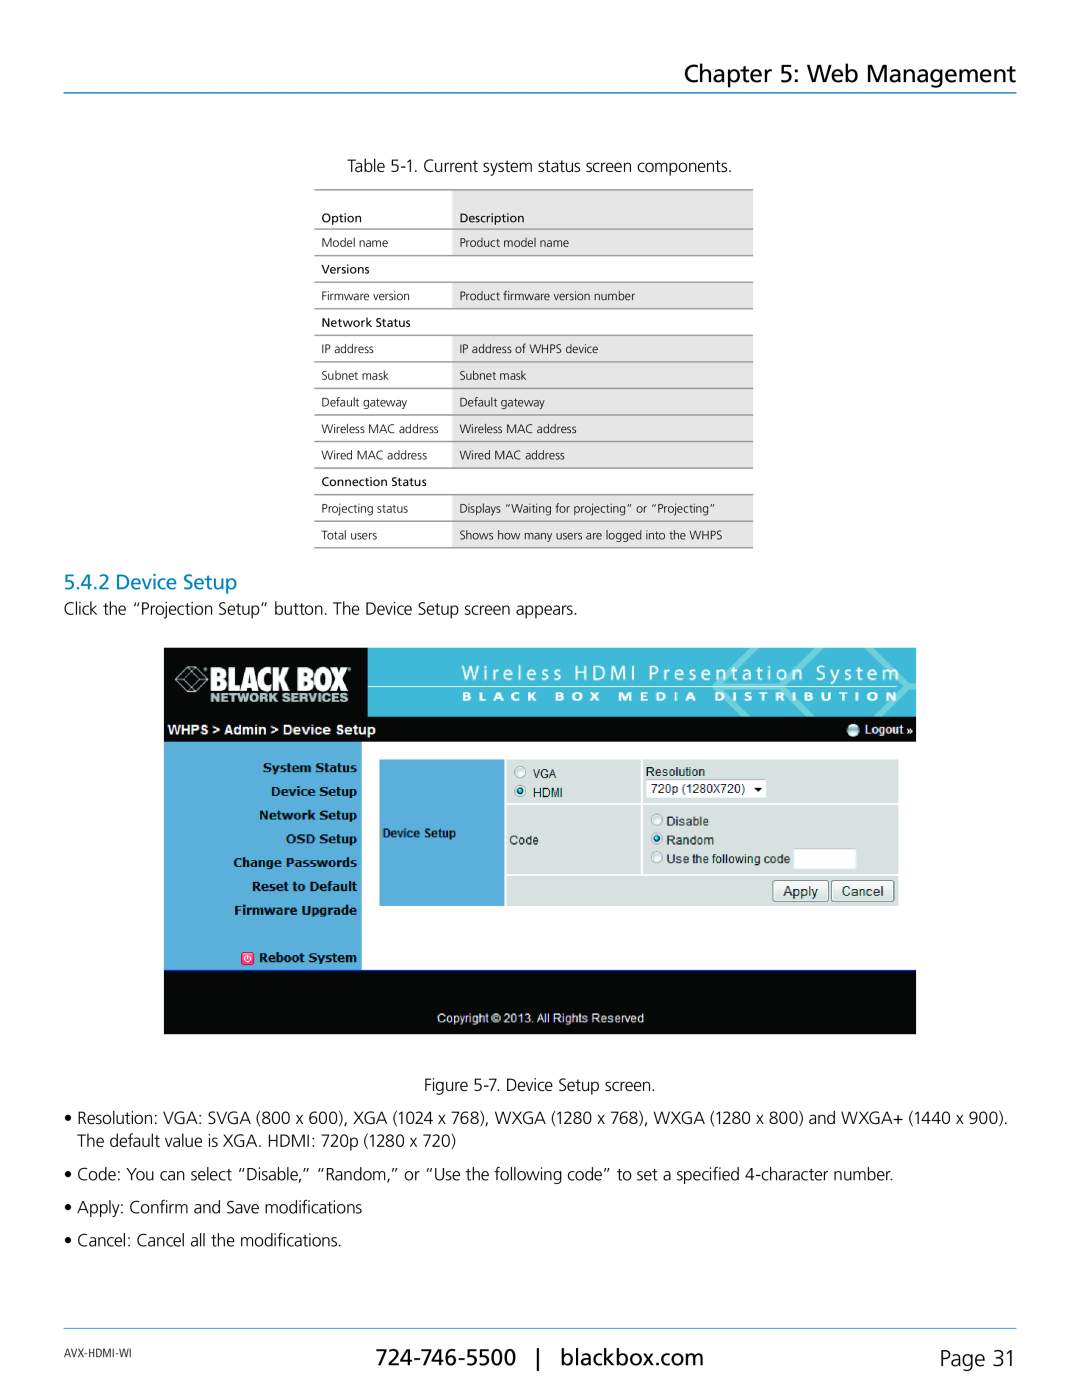 Black Box Wireless HDMI Presentation System (WHPS), AVX-HDMI-WI manual Device Setup, Web Management, Page 